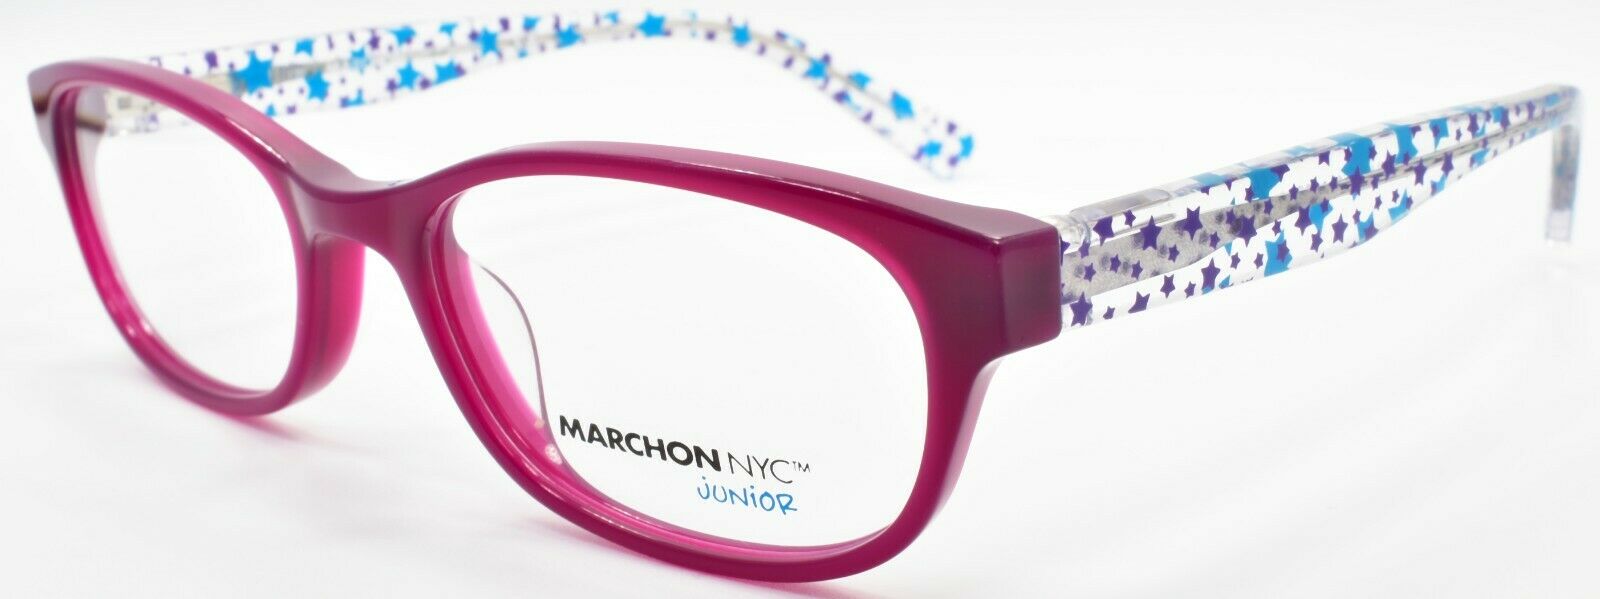 1-Marchon Junior M-Estella 513 Kids Girls Eyeglasses Frames 46-16-130 Purple-886895271103-IKSpecs